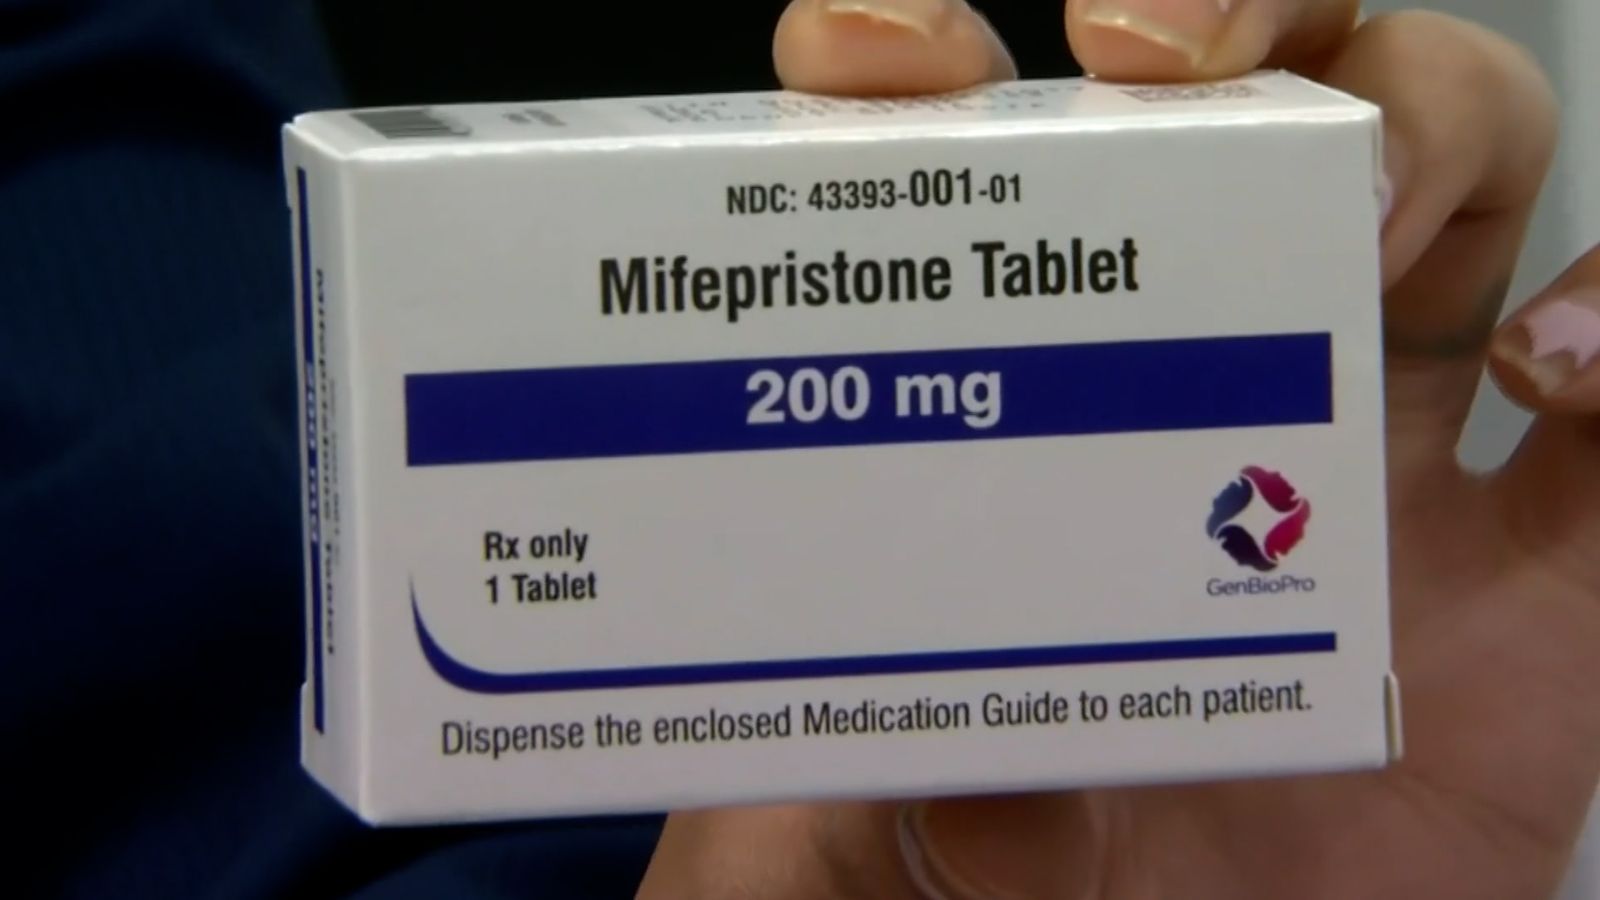 Mifepristone: Joe Biden to fight judge's ruling to halt approval of major abortion pill